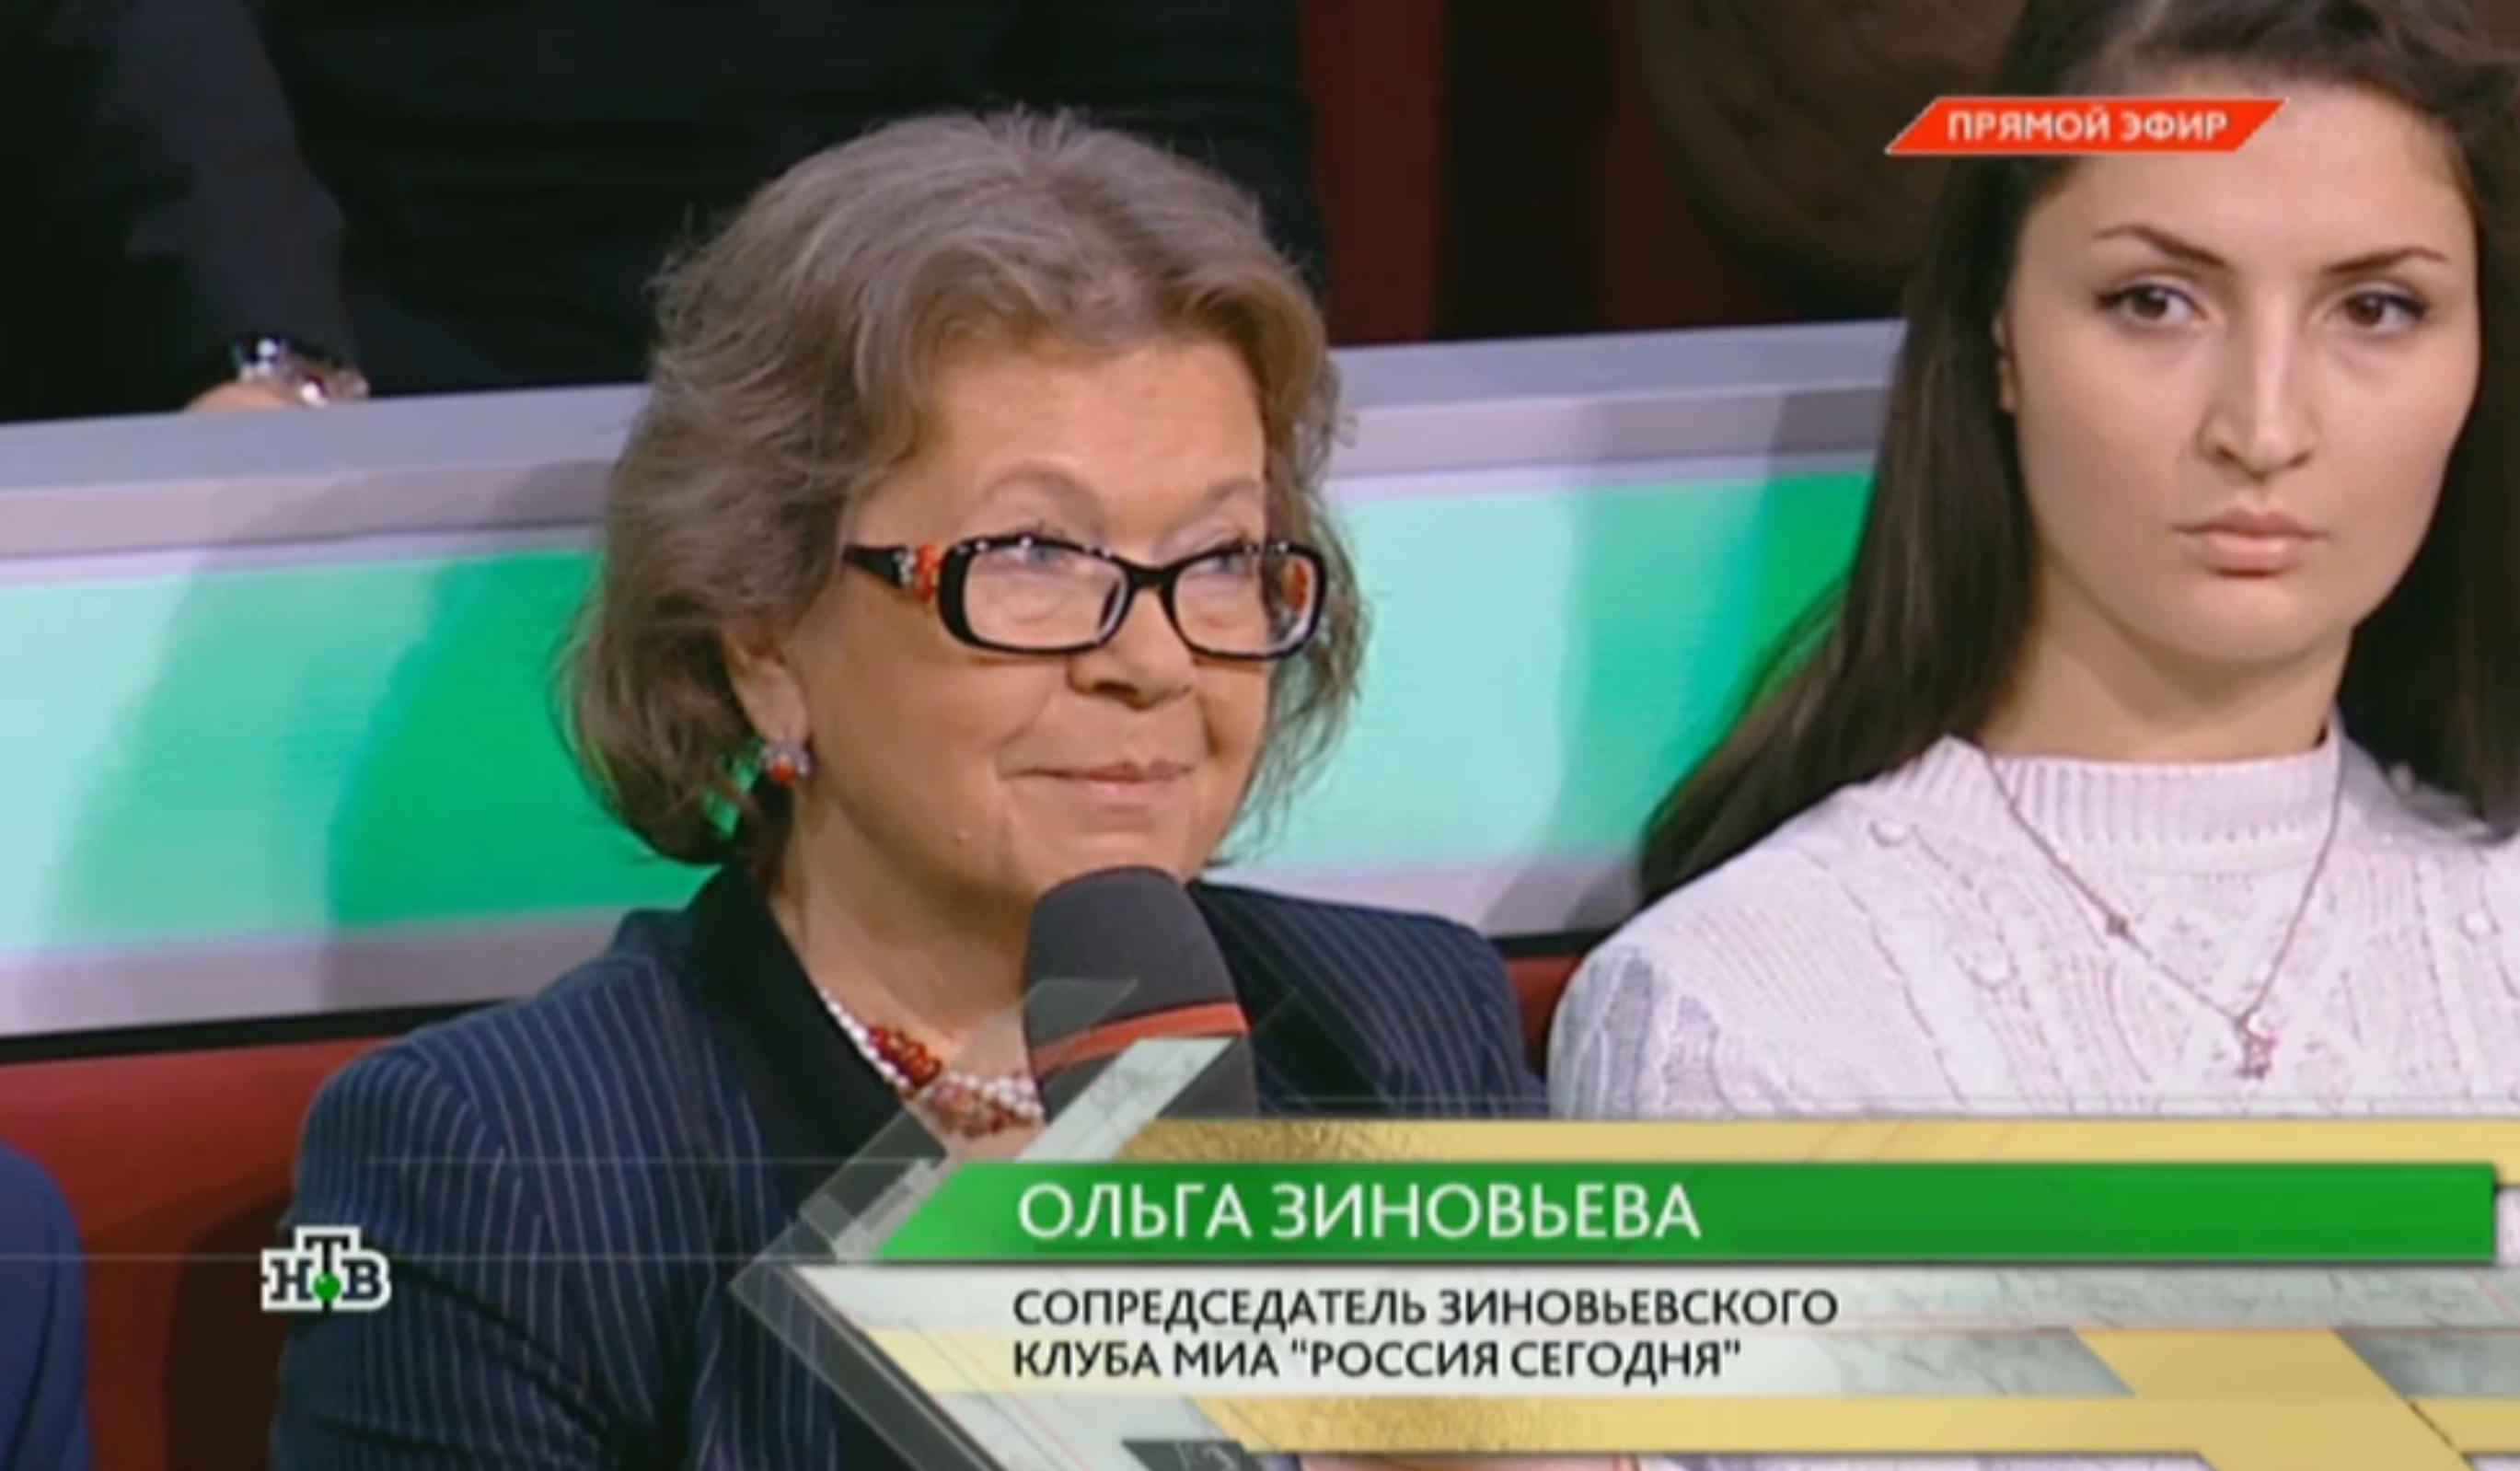 Ольга Зиновьева, НТВ, 3.11.2016 г.